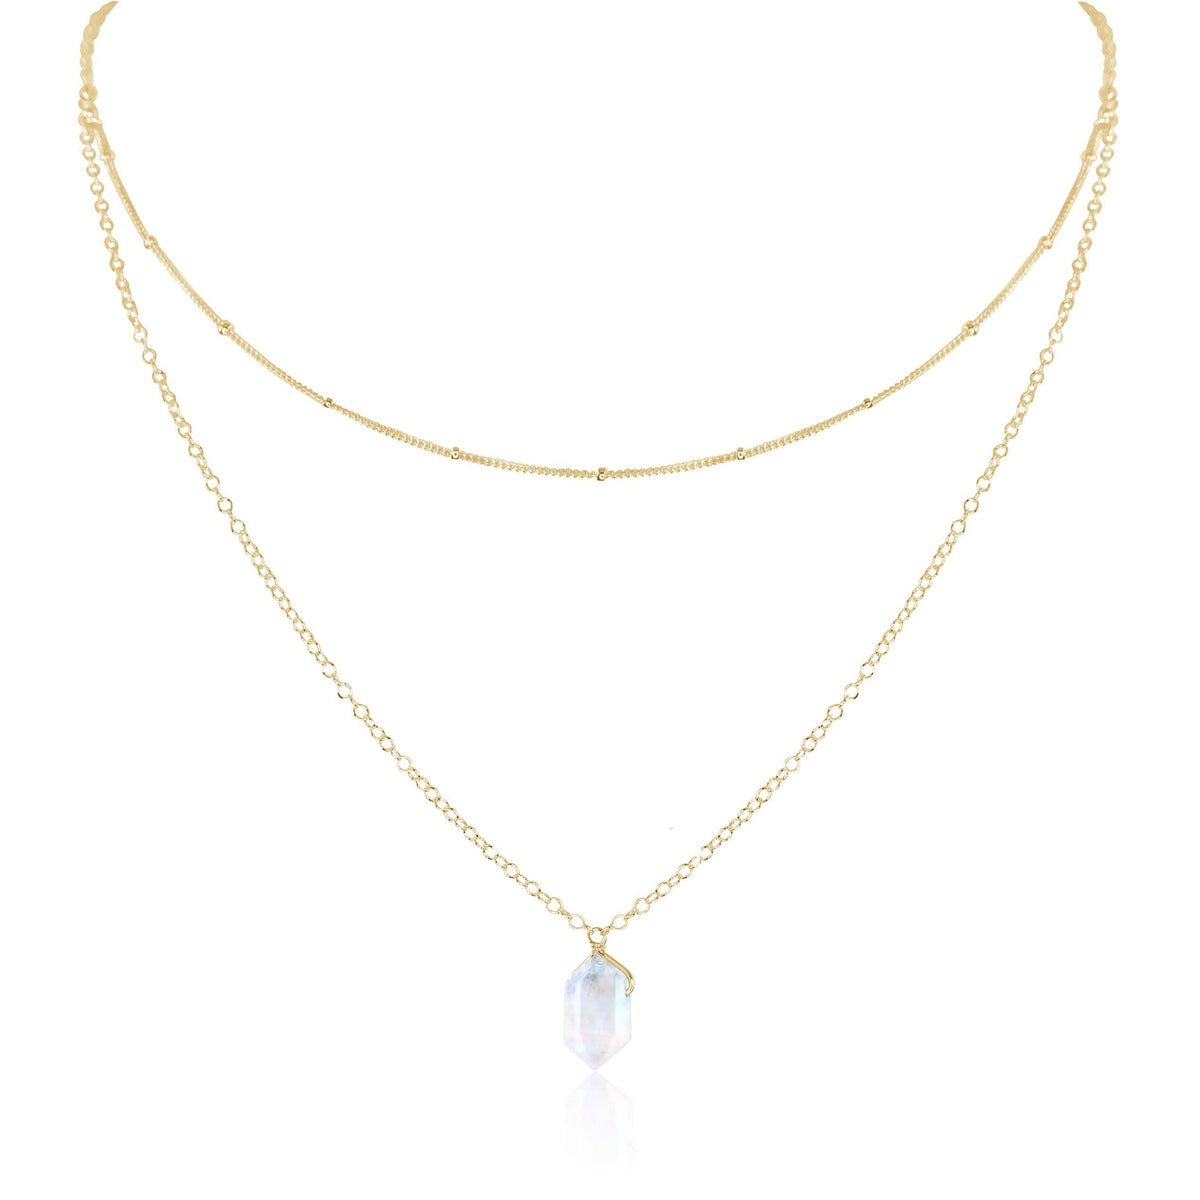 Double Terminated Crystal Layered Choker - Rainbow Moonstone - 14K Gold Fill - Luna Tide Handmade Jewellery